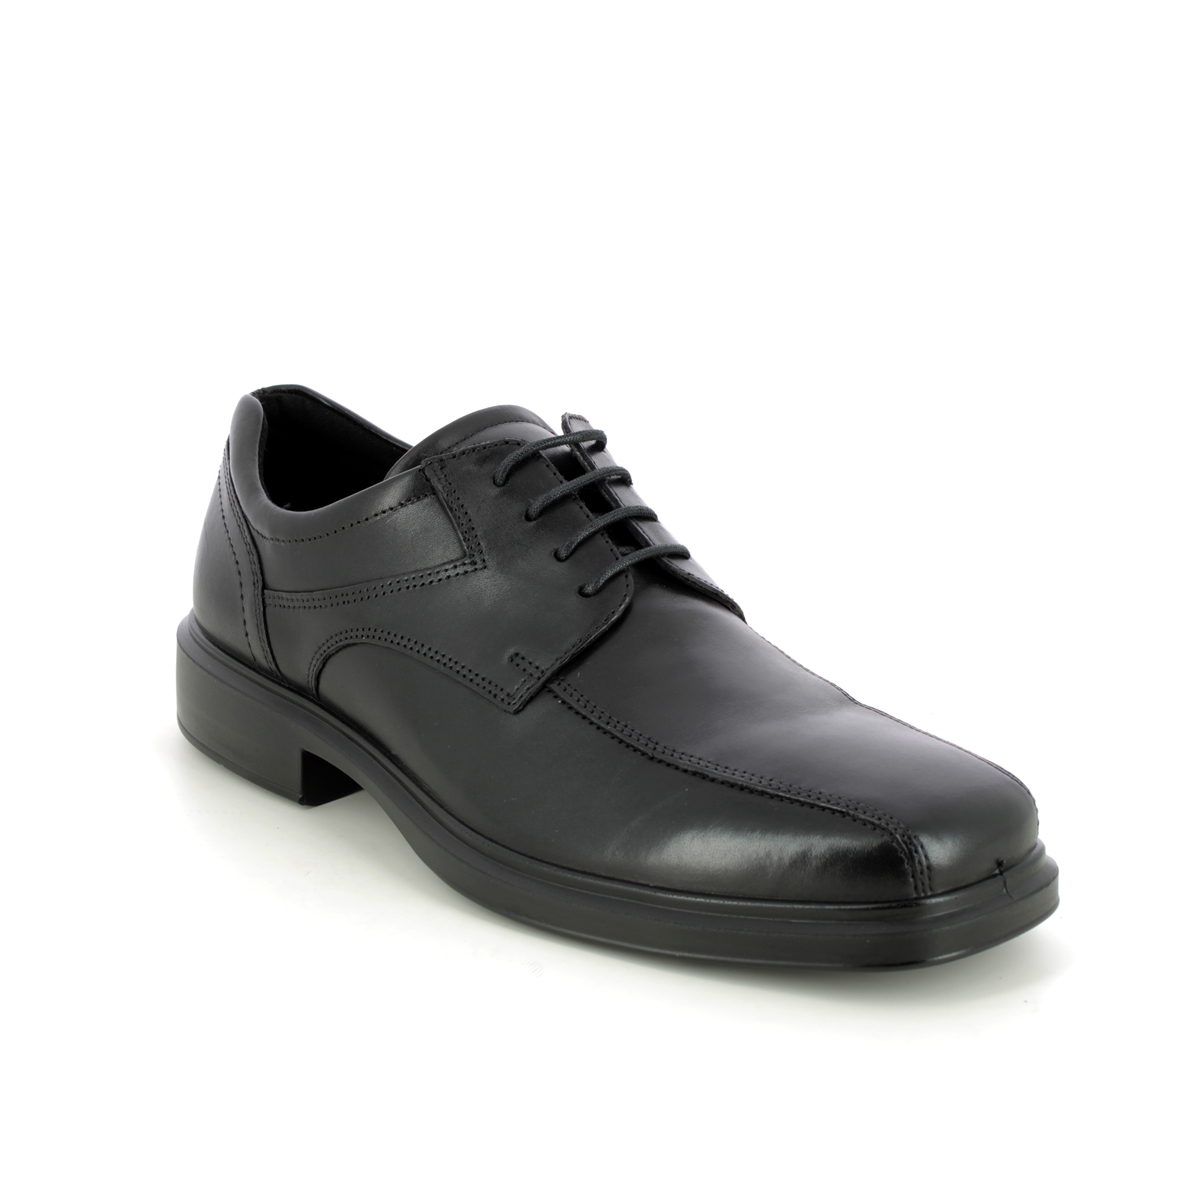 Ecco Helsinki 2 Tram Black Leather Mens Formal Shoes 500174-01001 In Size 42 In Plain Black Leather